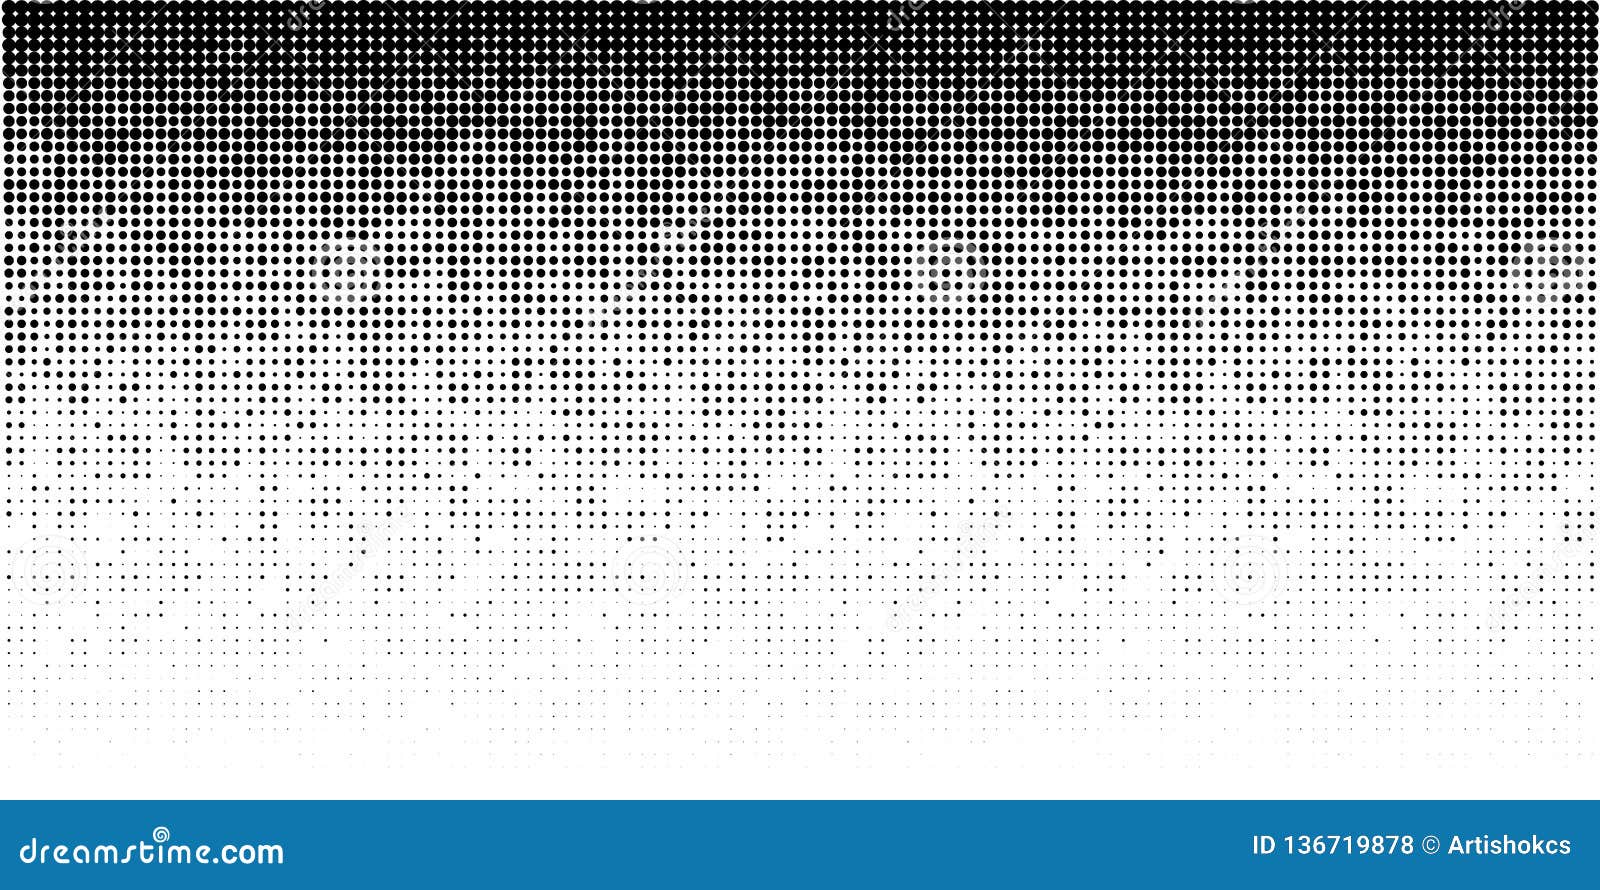 halftone horizontal gradient pattern. background using halftone random dots texture. grunge backdrop. technology. 